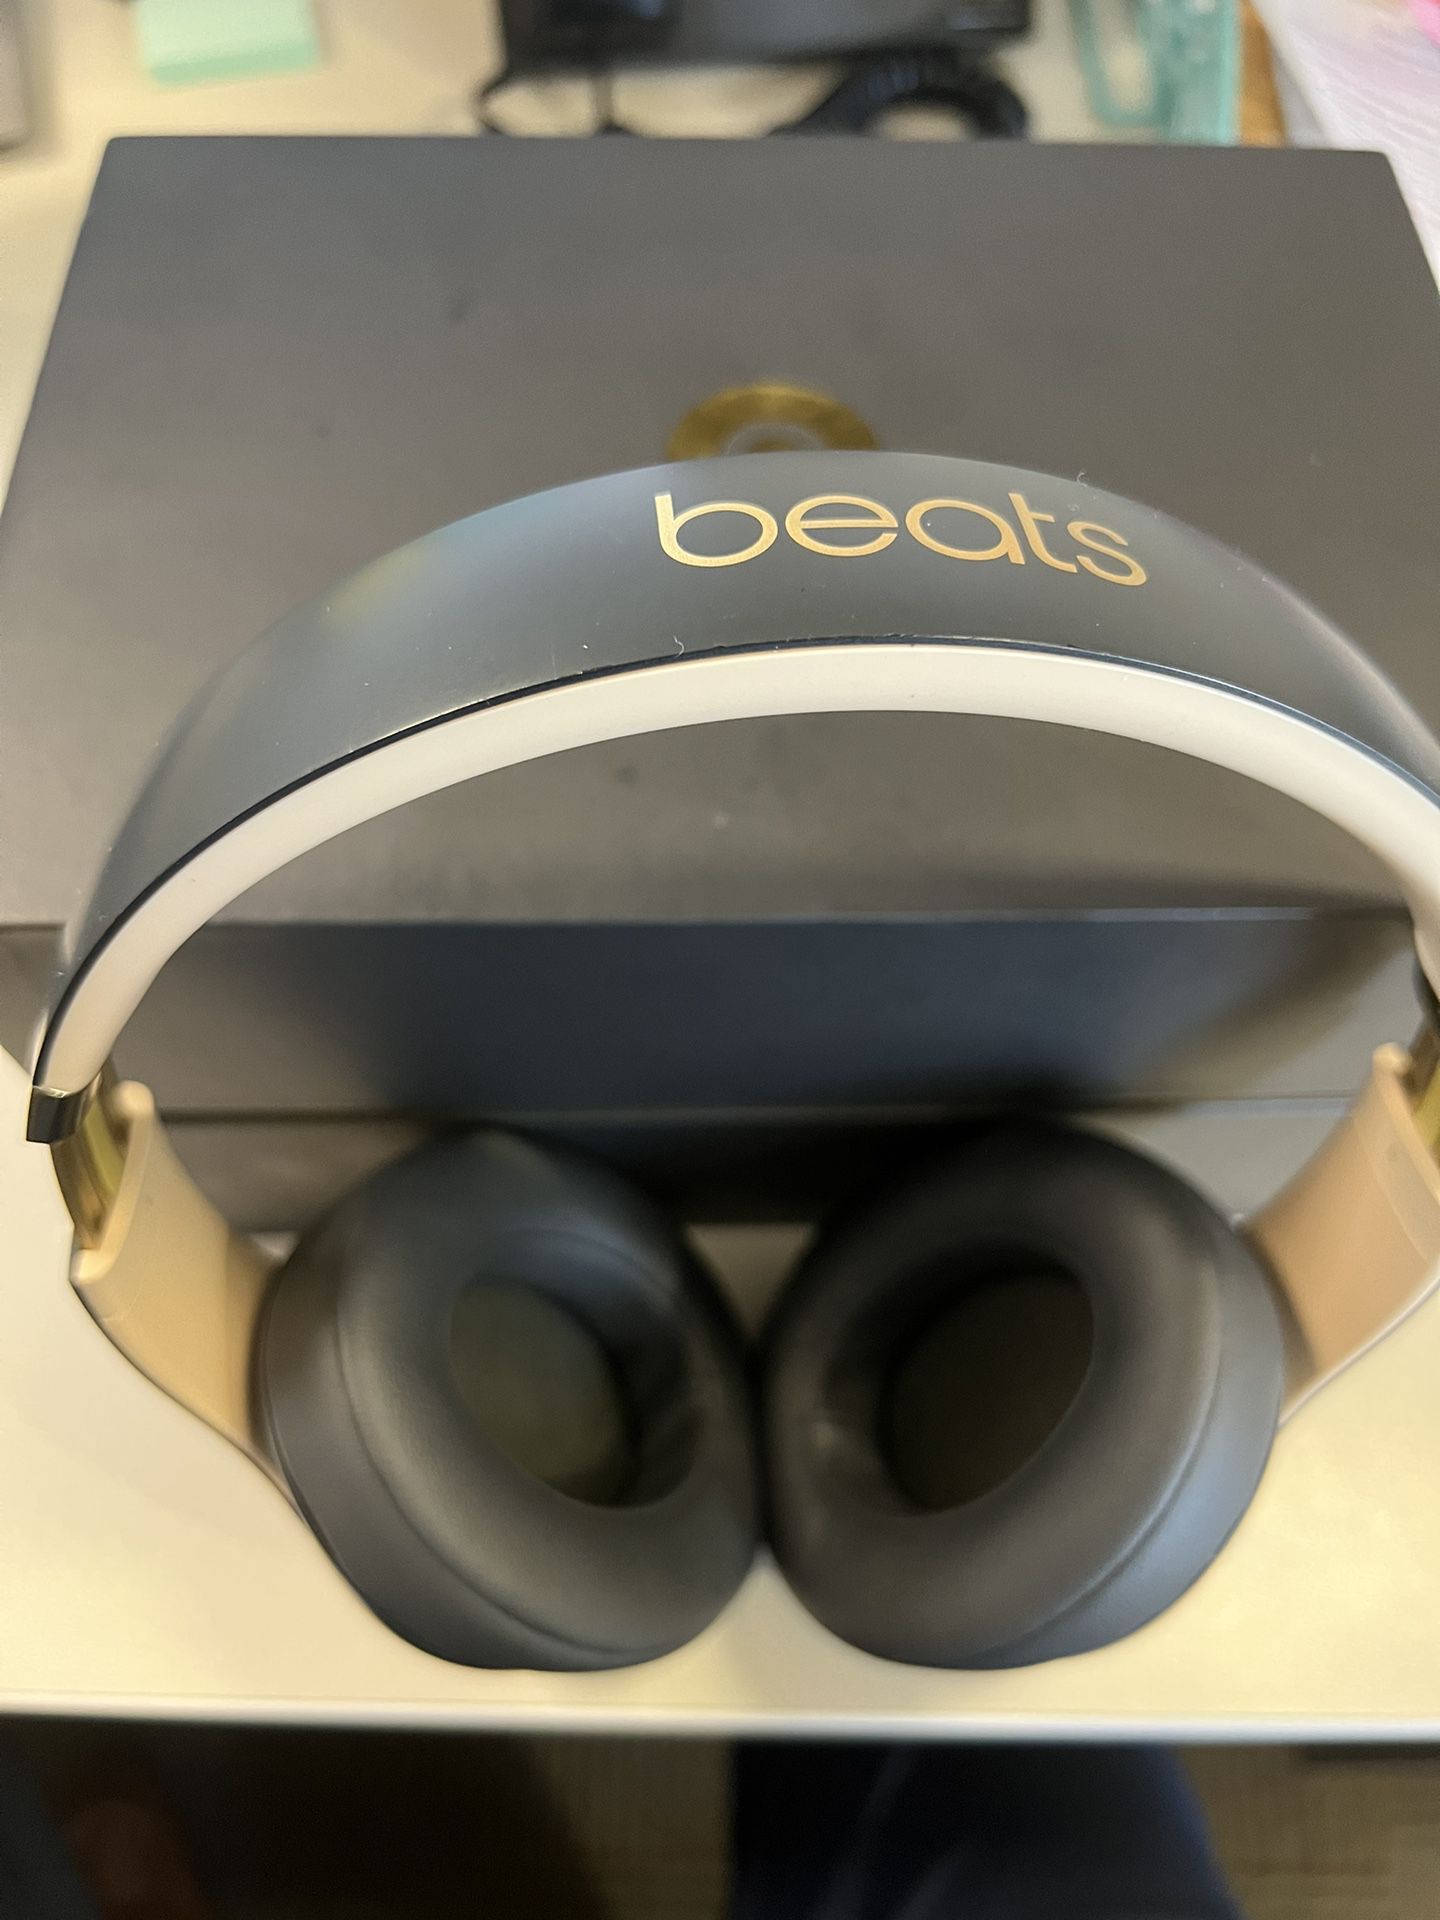 Beats Studio 3 Wireless Headphones with Original Box and Carrying Case